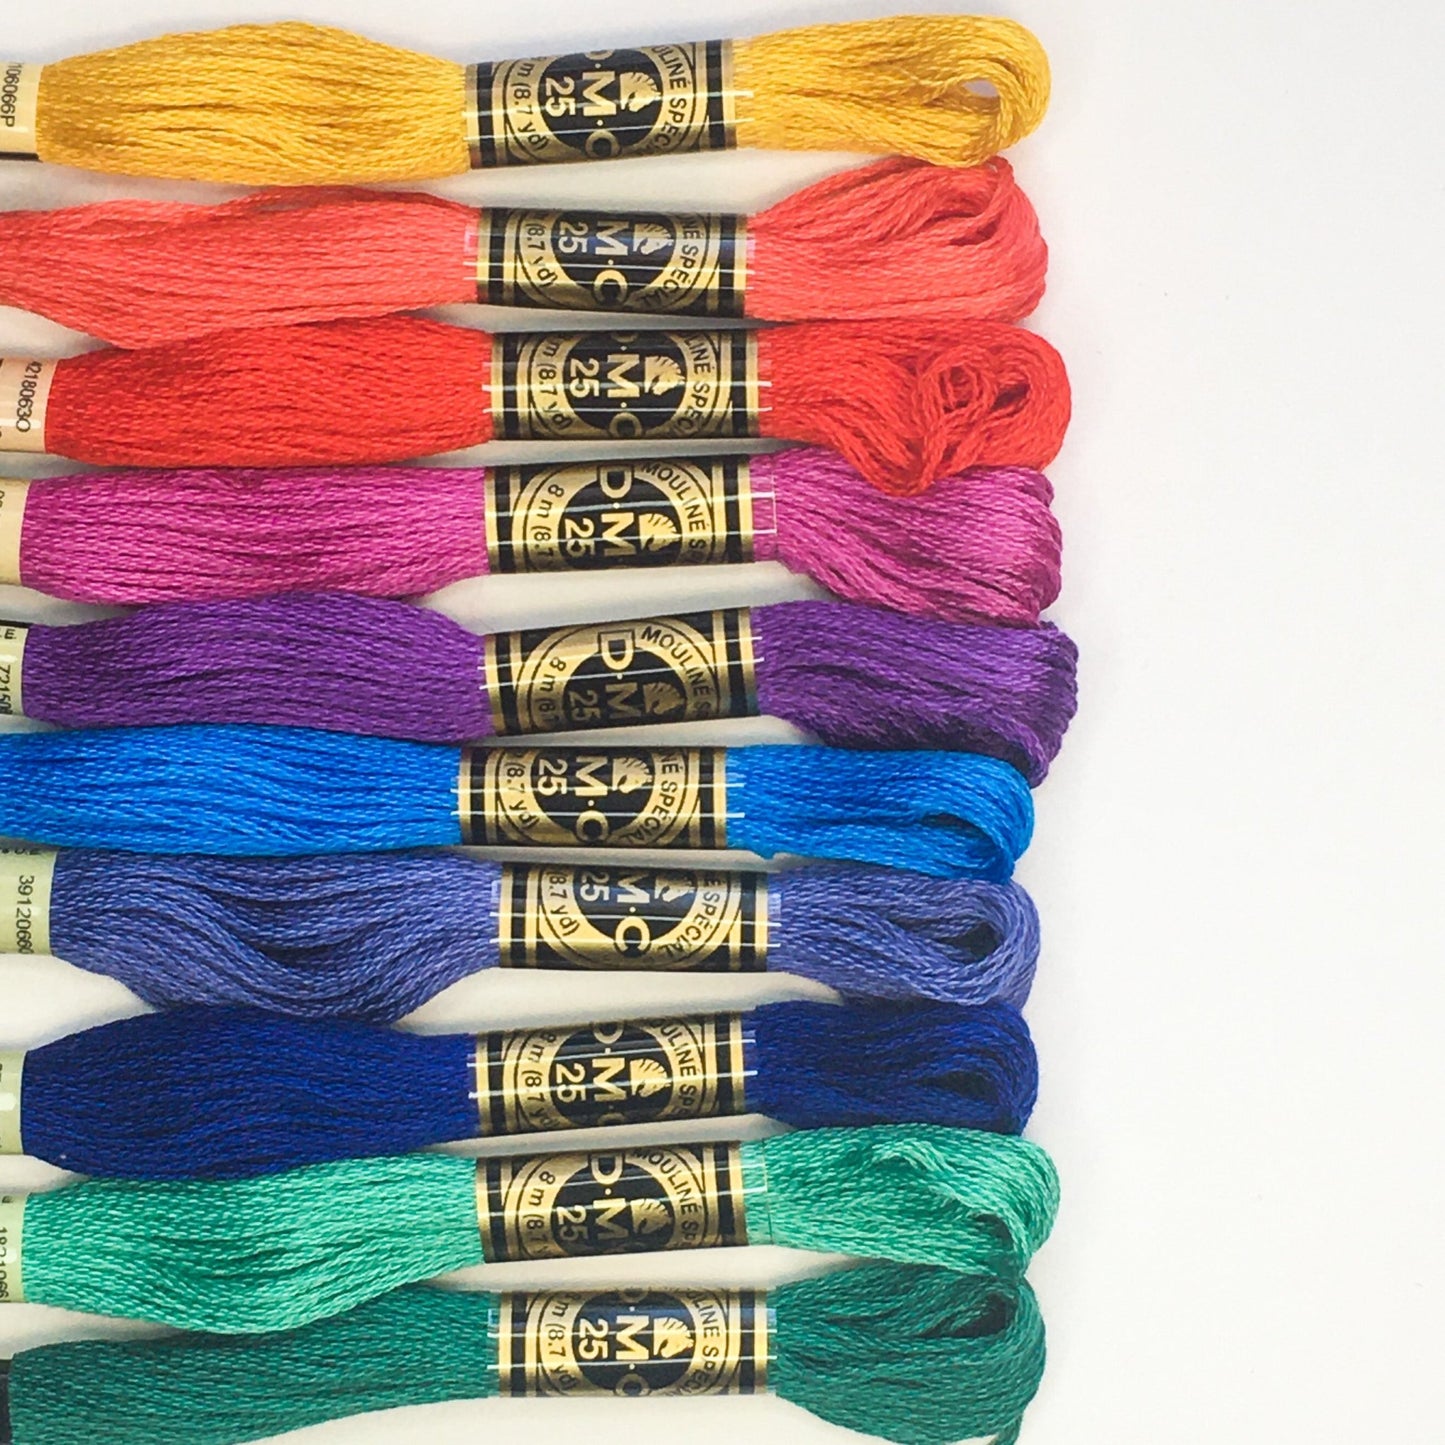 Mexico DMC embroidery thread bundle - Craft Make Do